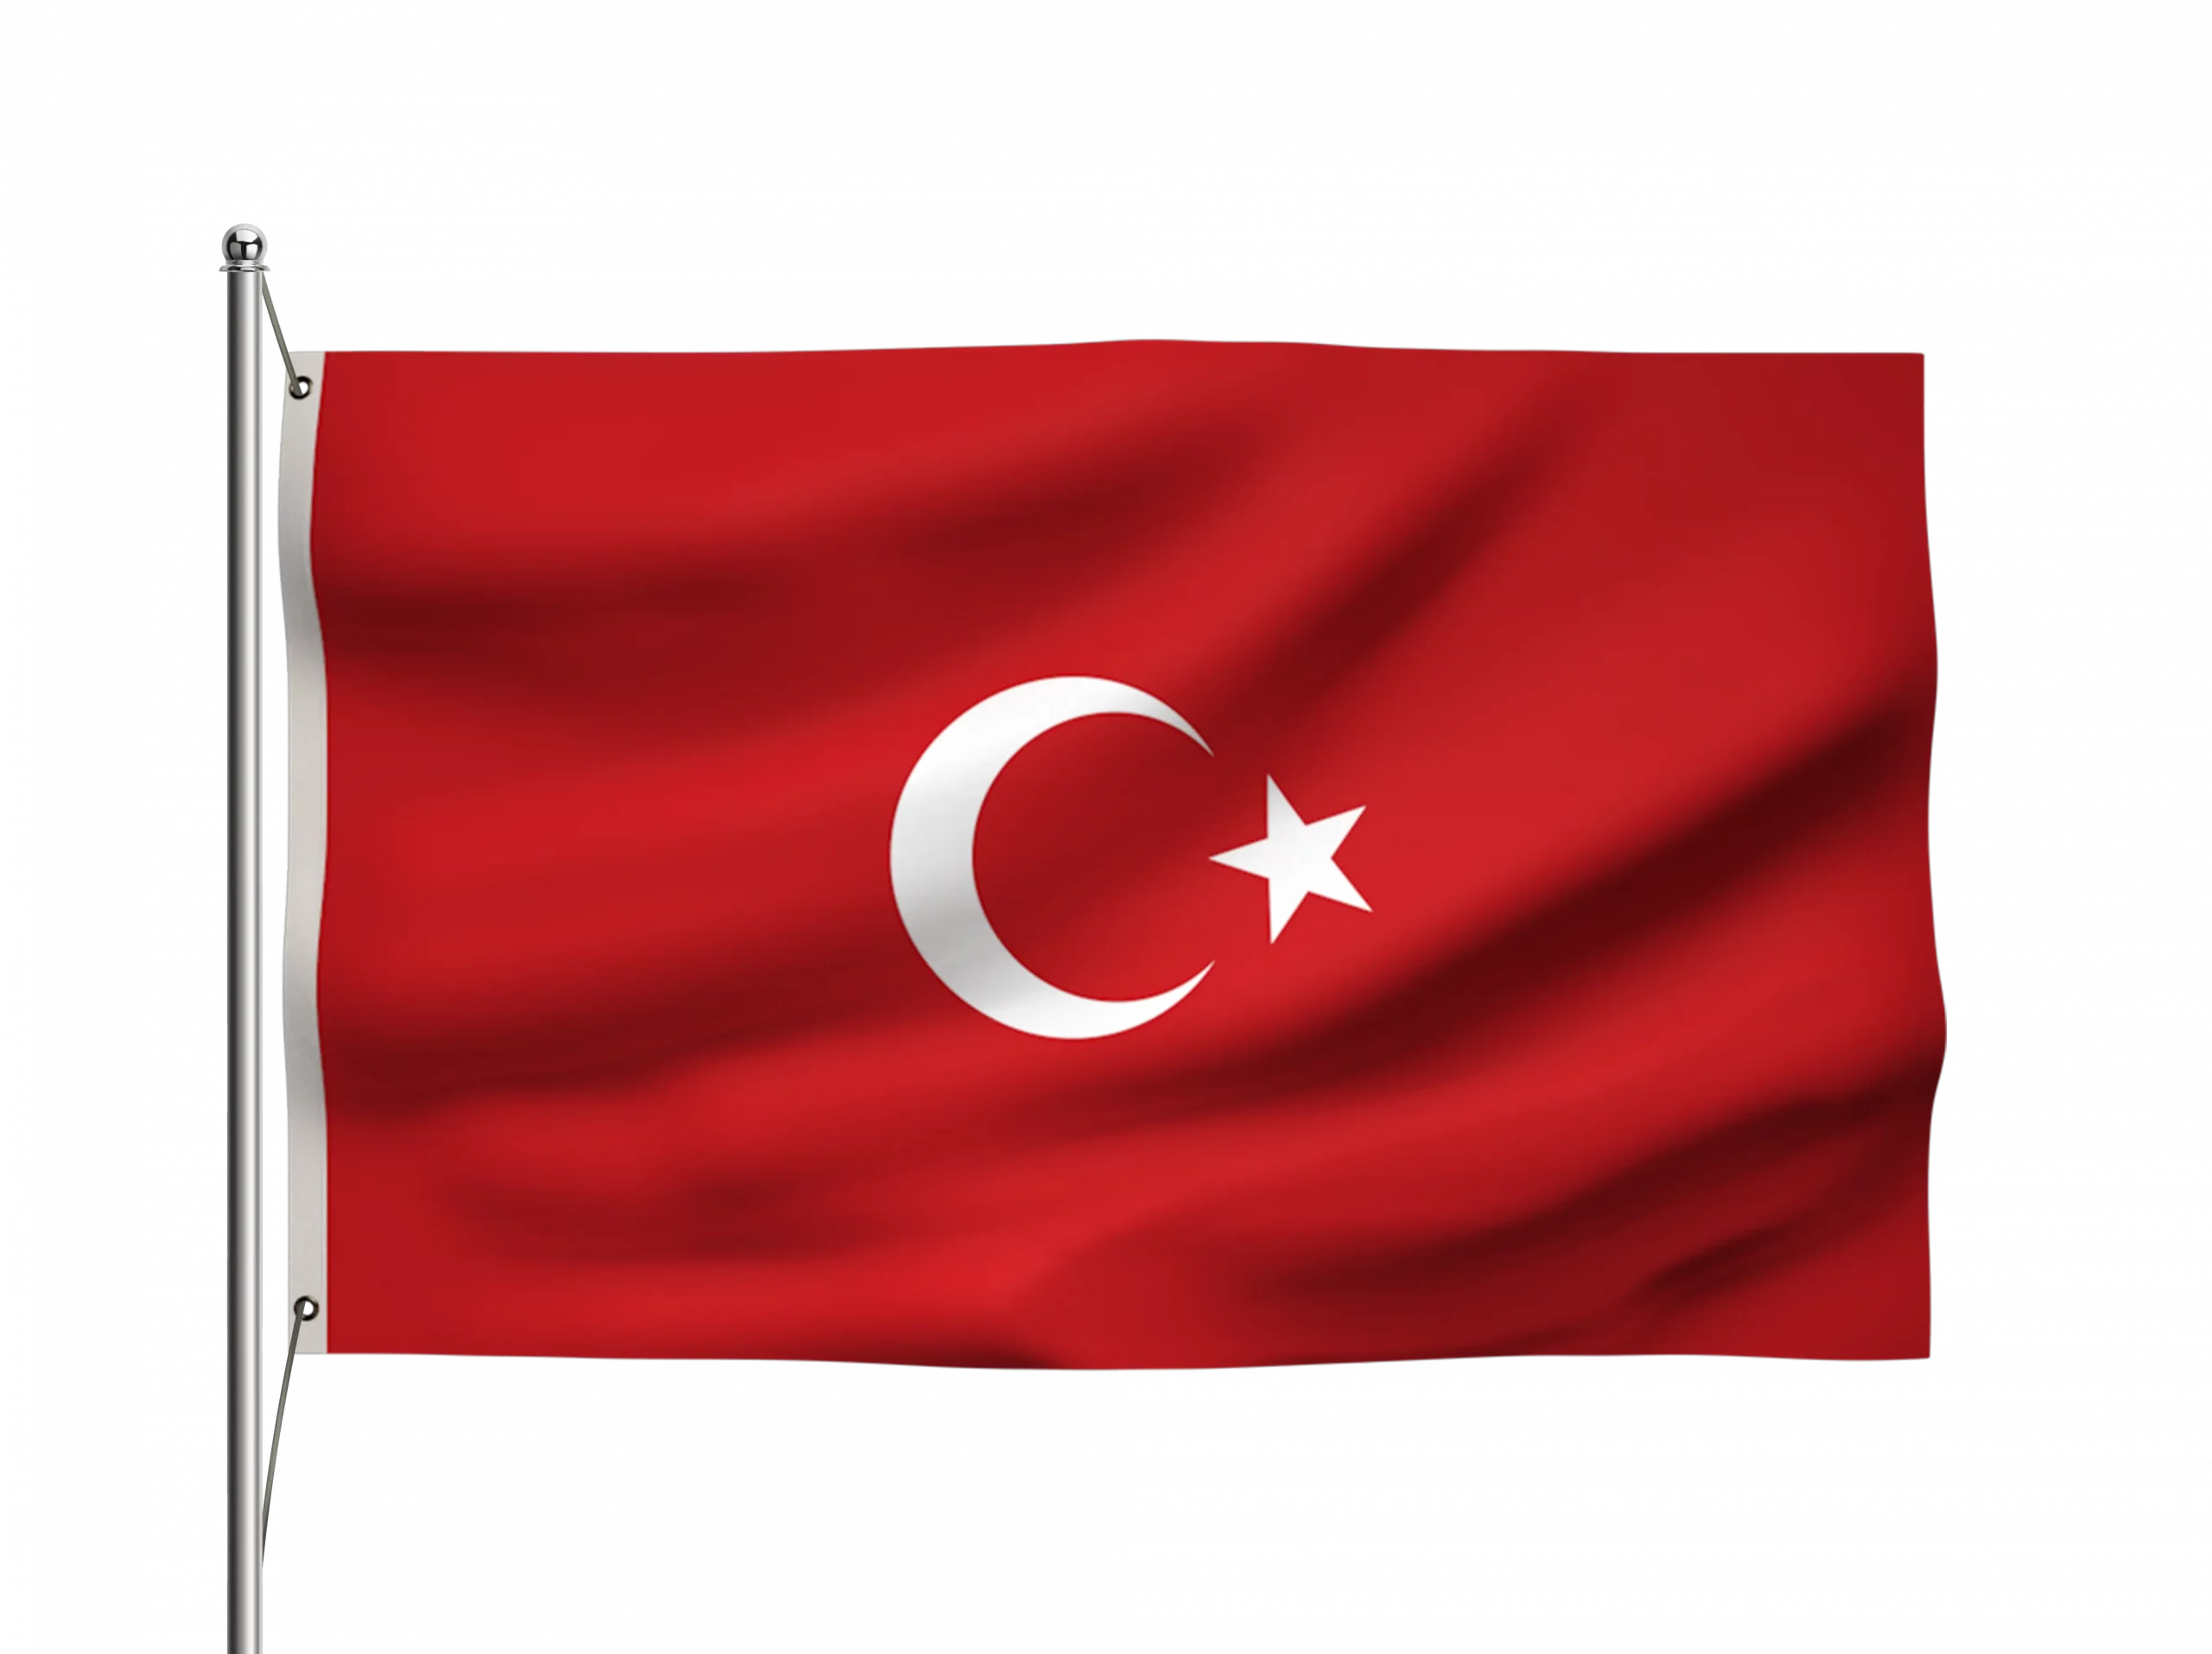 Ay yıldız : Histoire du drapeau turc - Le Taurillon